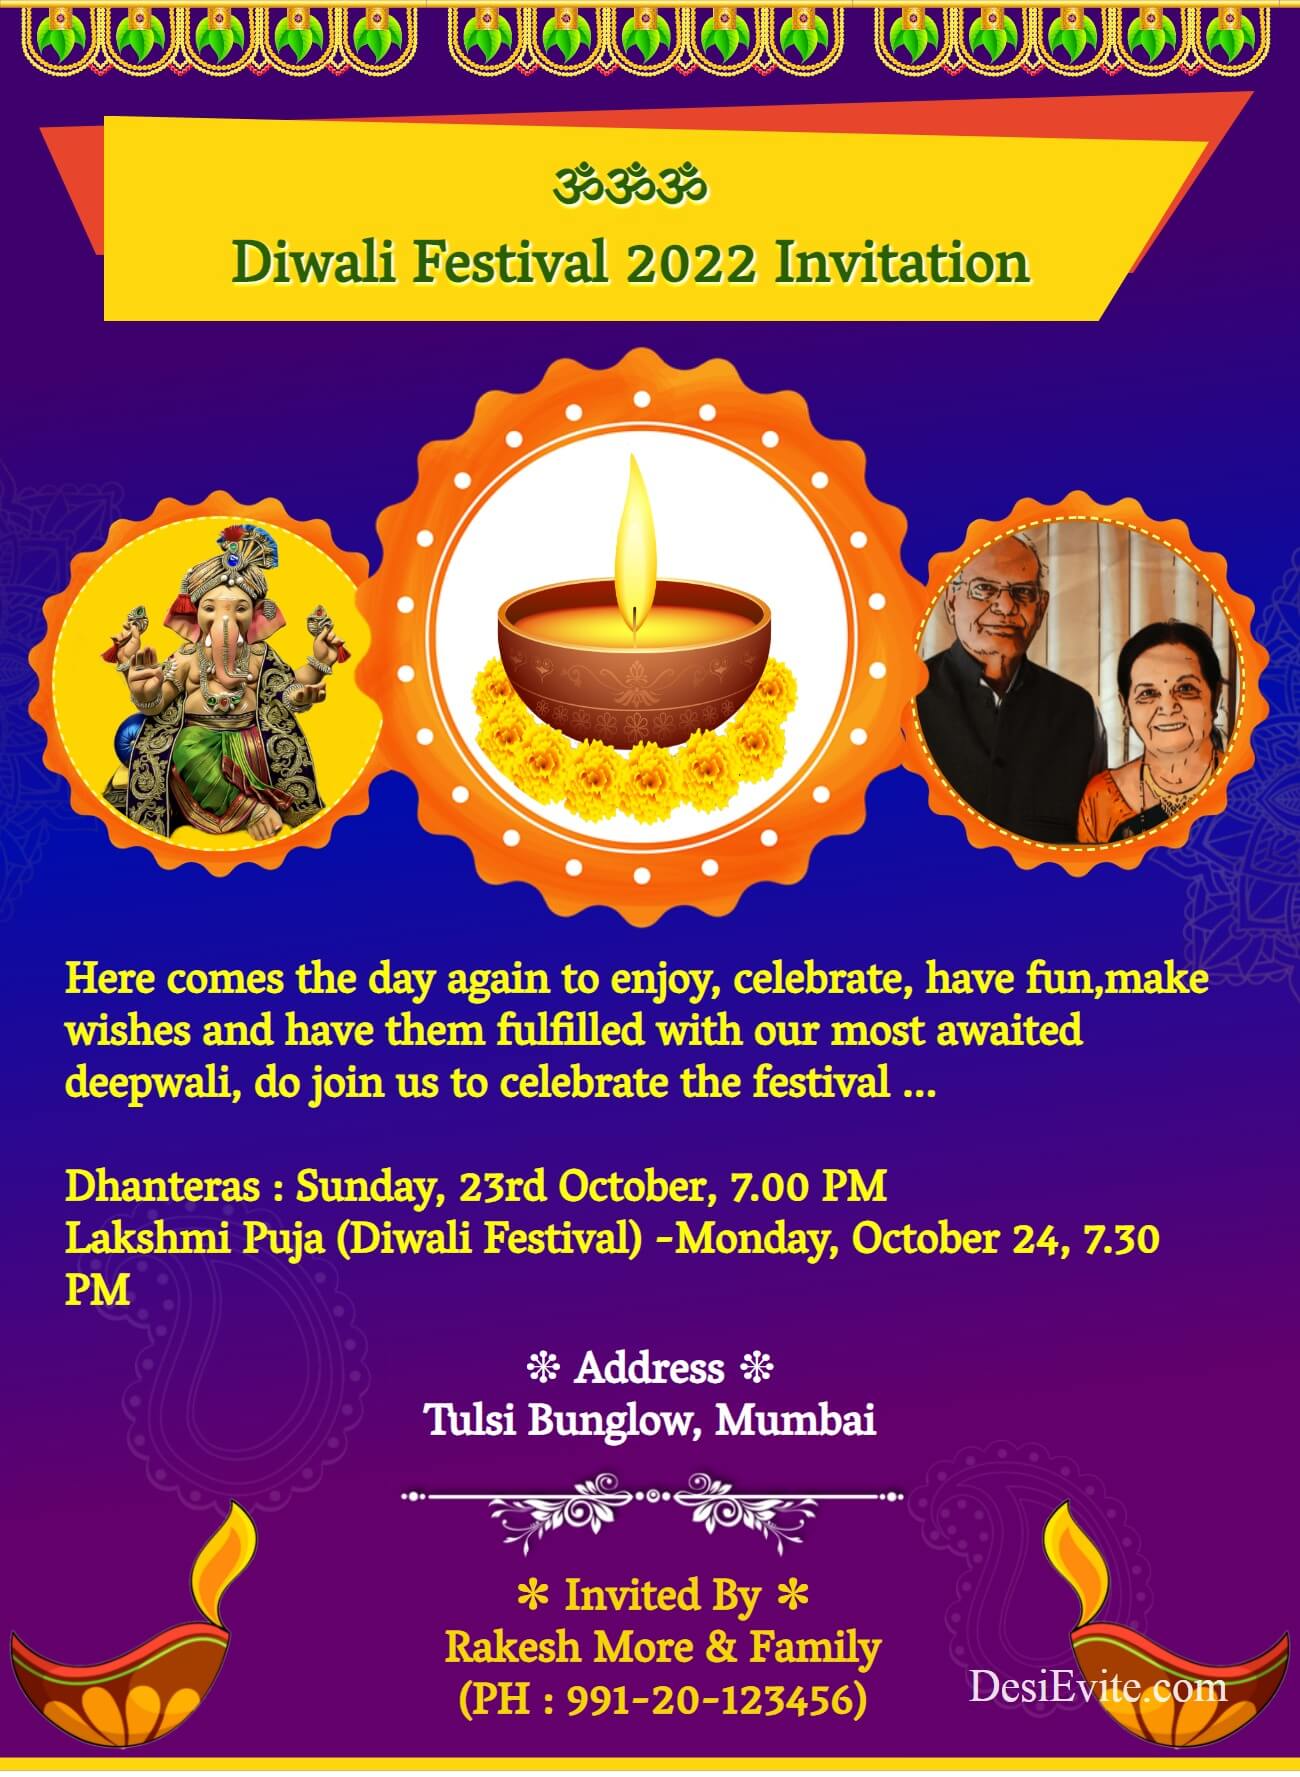 diwali festival invitation card three photo upload 70 